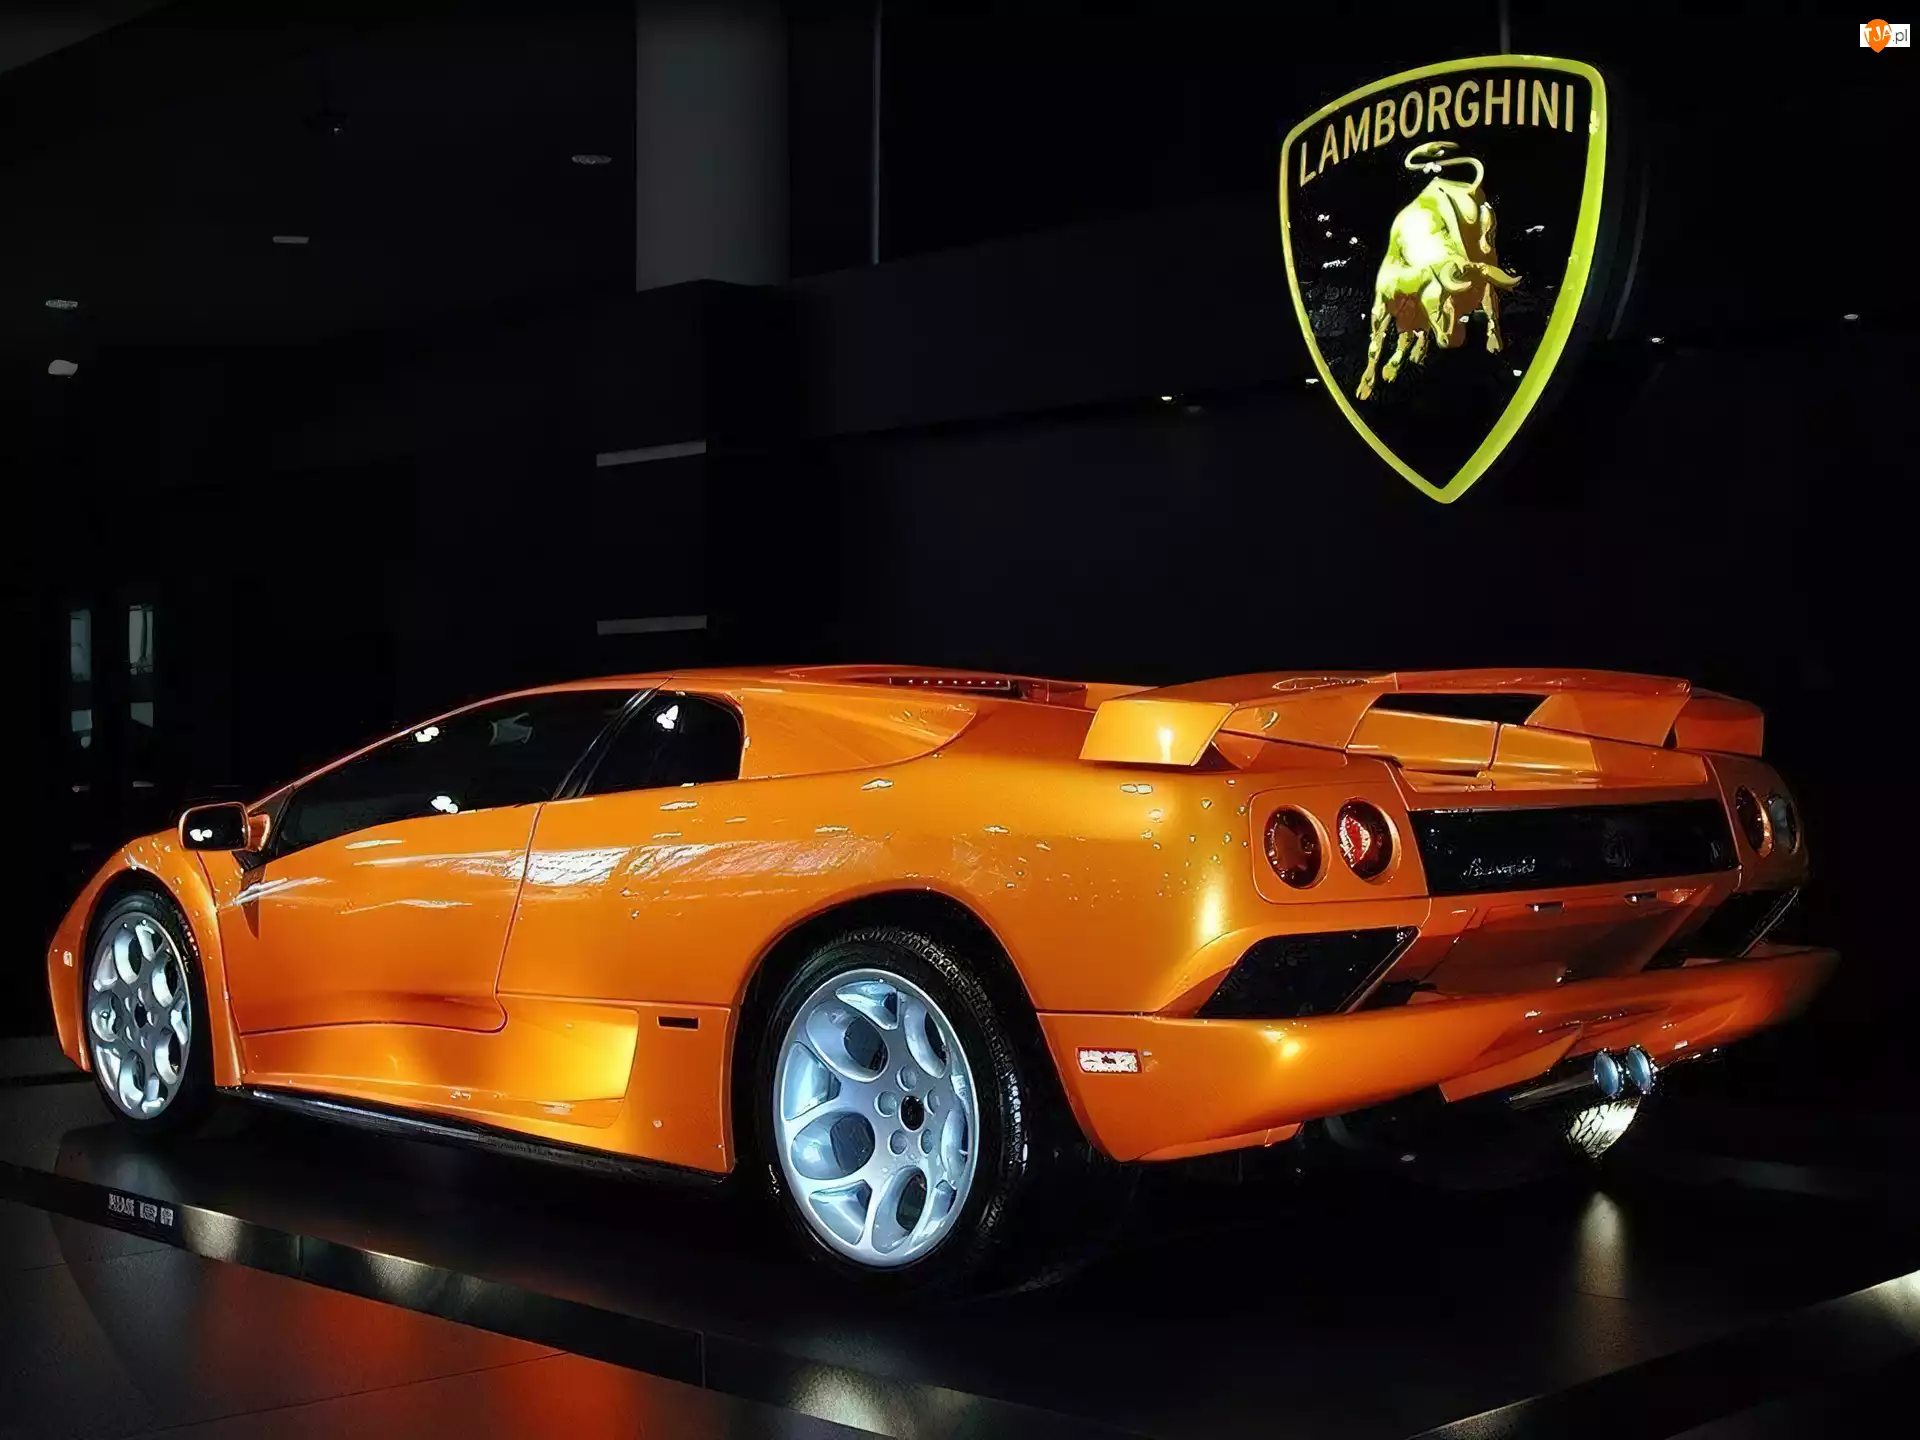 Wystawa, Lamborghini Diablo